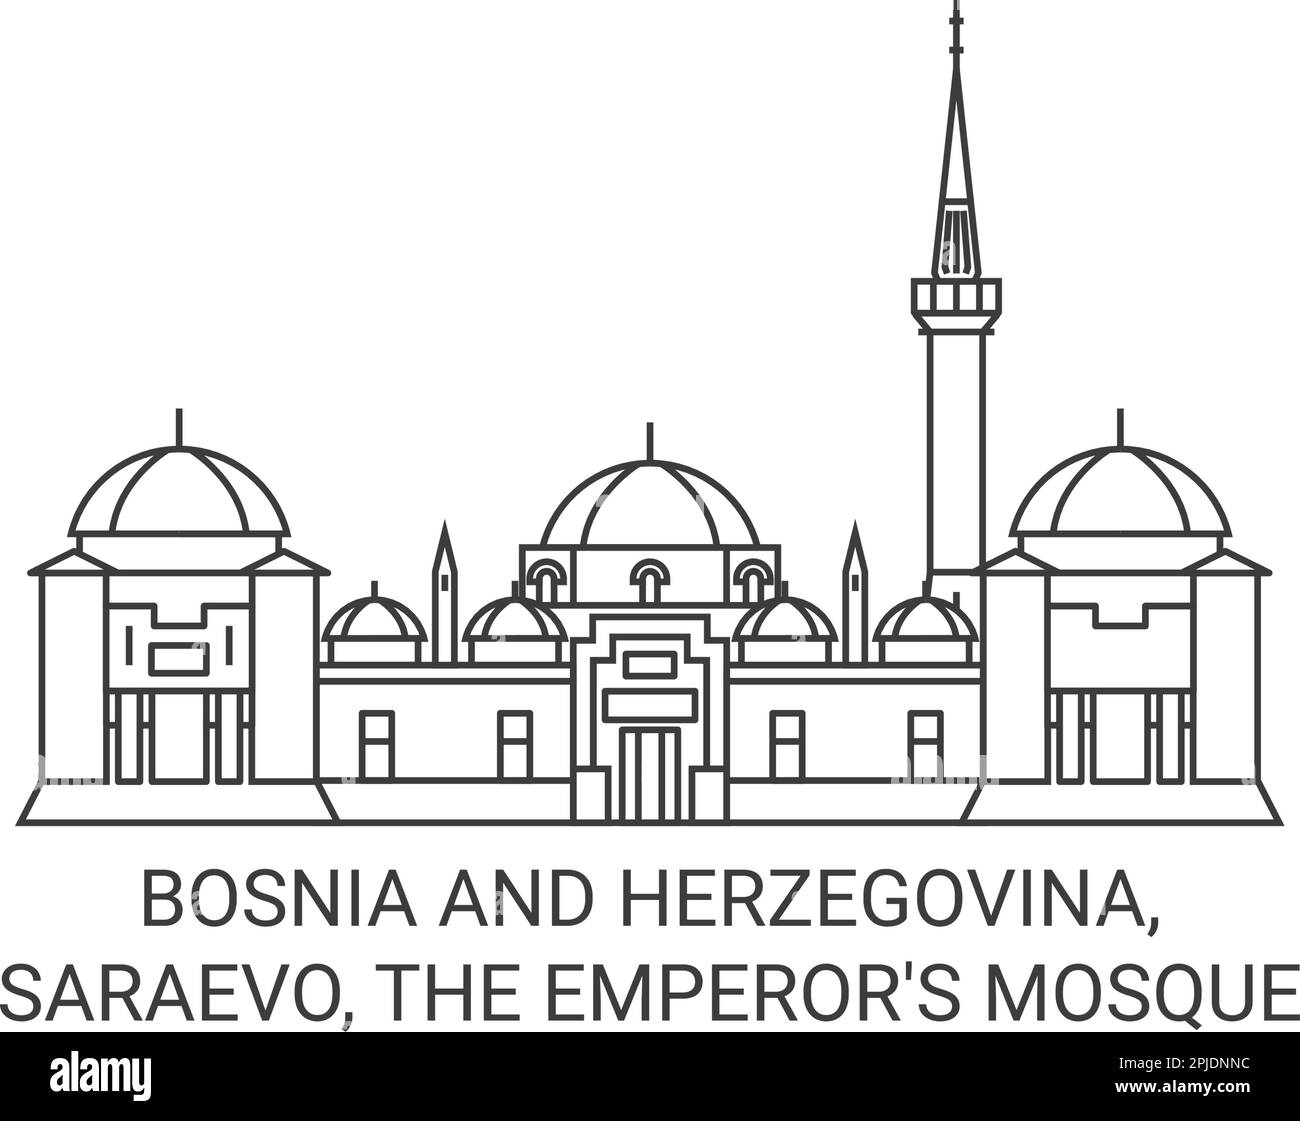 Bosnia And Herzegovina, Saraevo, The Emperor's Mosque travel landmark vector illustration Stock Vector